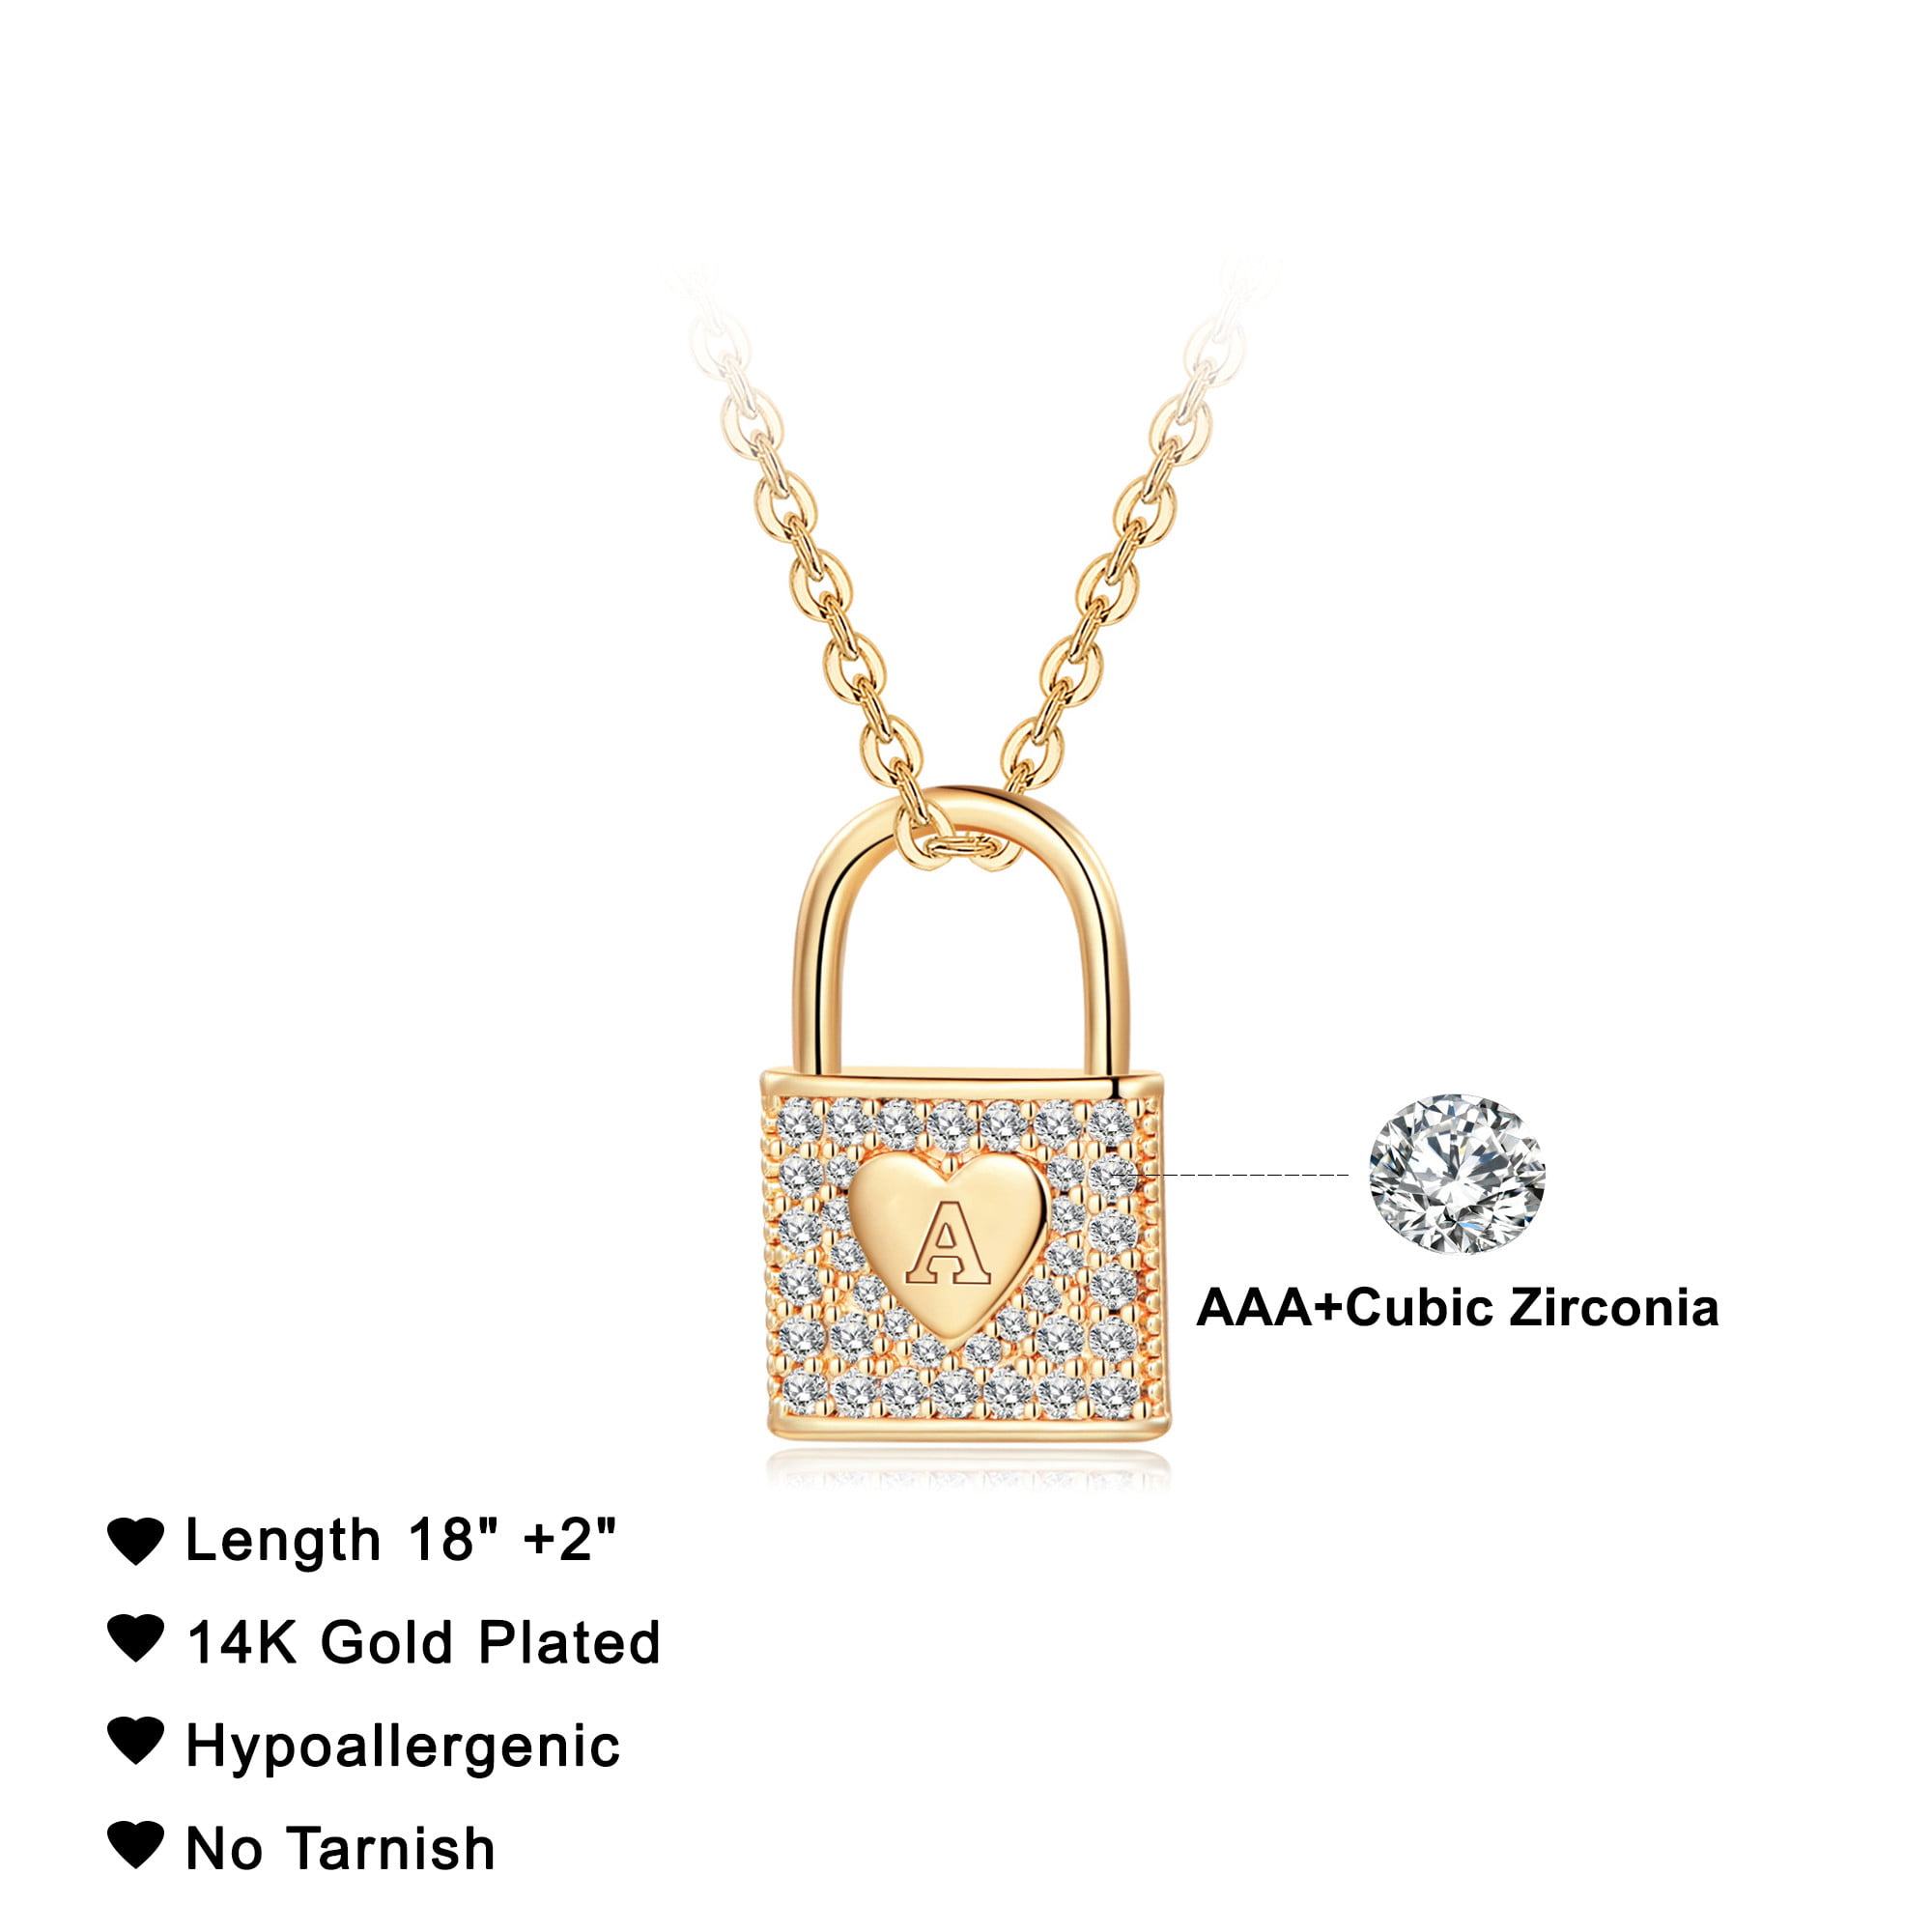 Dainty Lock & Key Necklace - Gold Finish Charm Necklace - Shop Ringmasters